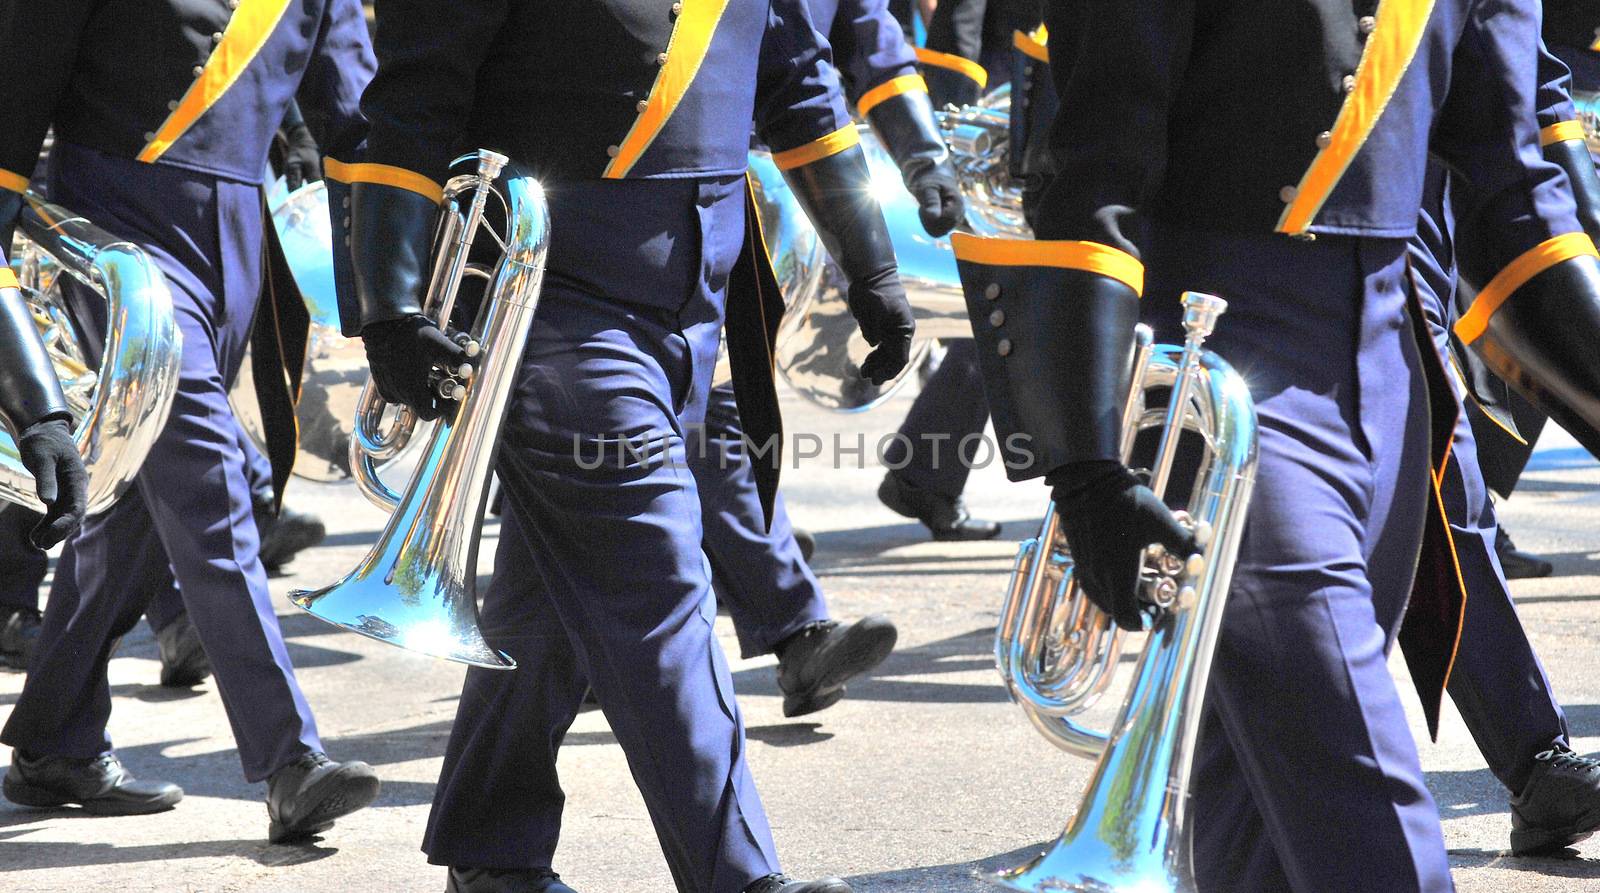 Marching band. by oscarcwilliams